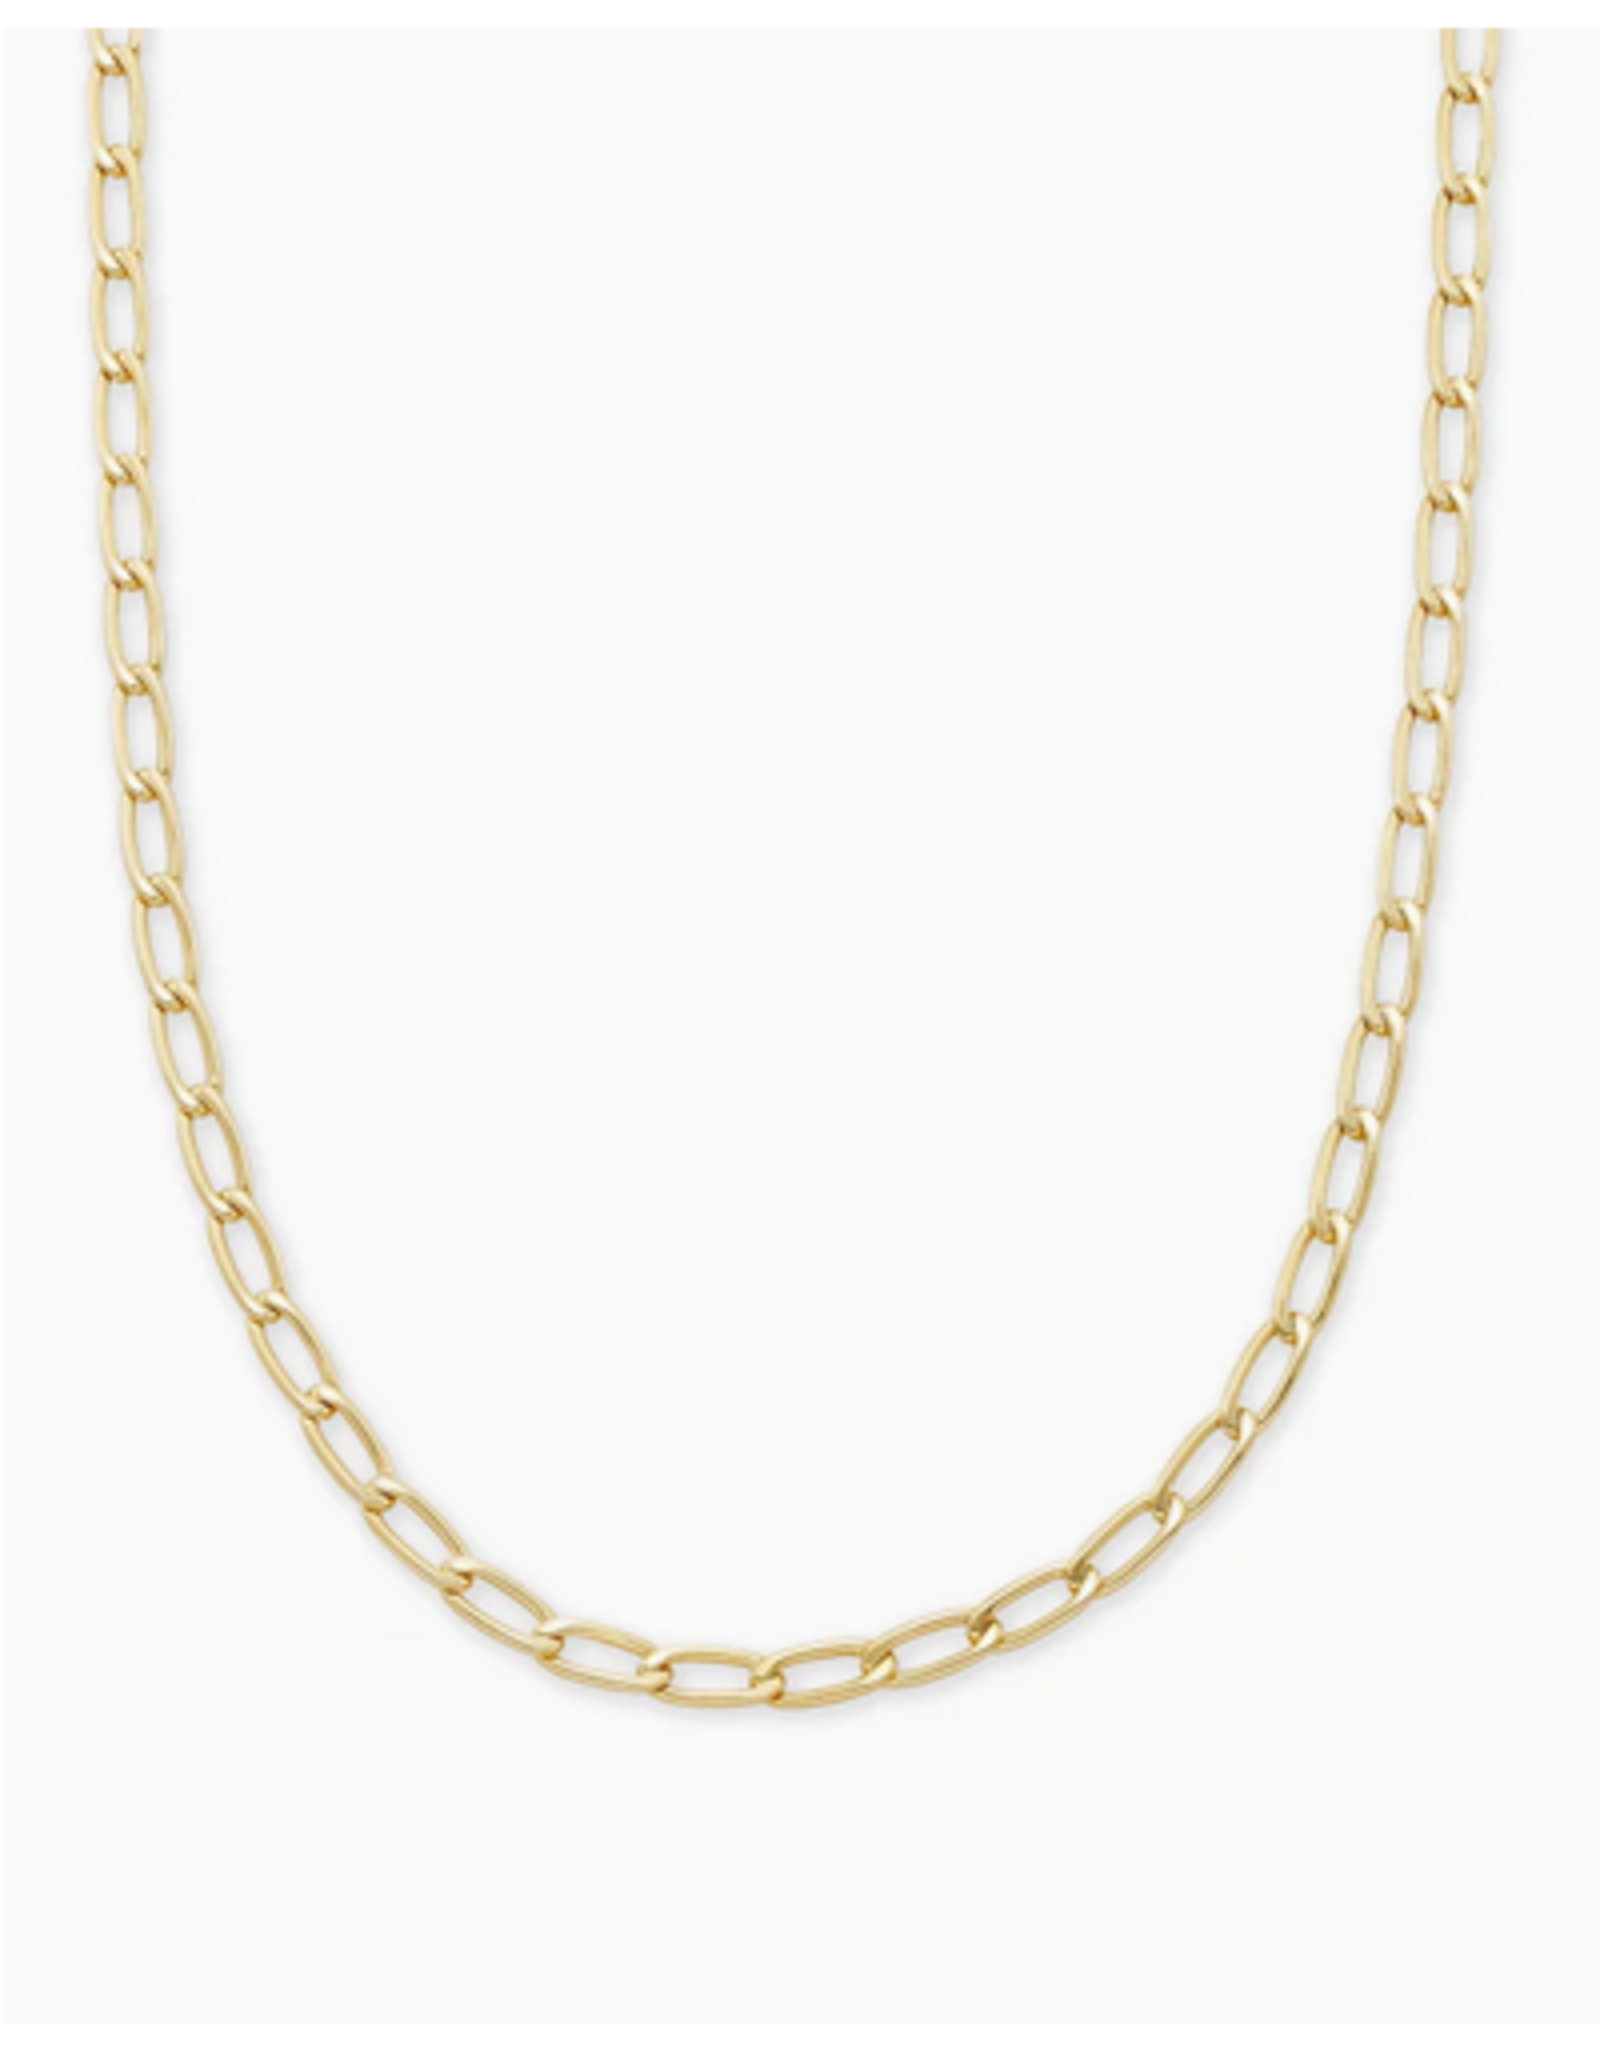 Kendra Scott Merrick Gold Chain Necklace